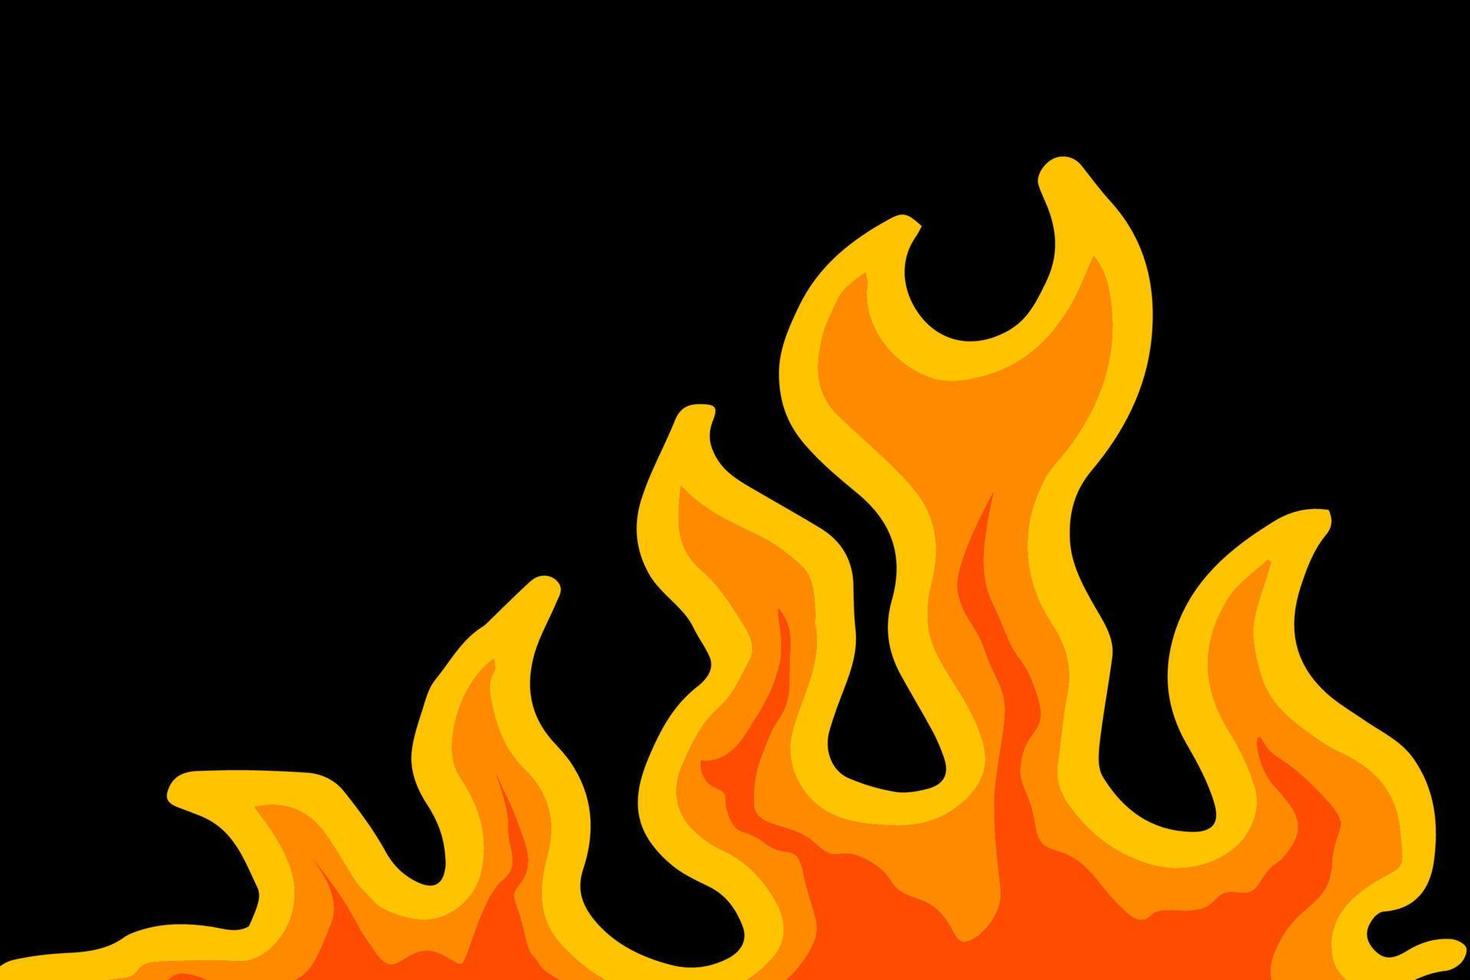 Flamme Hintergrund Vektorgrafiken Illustration Designs vektor